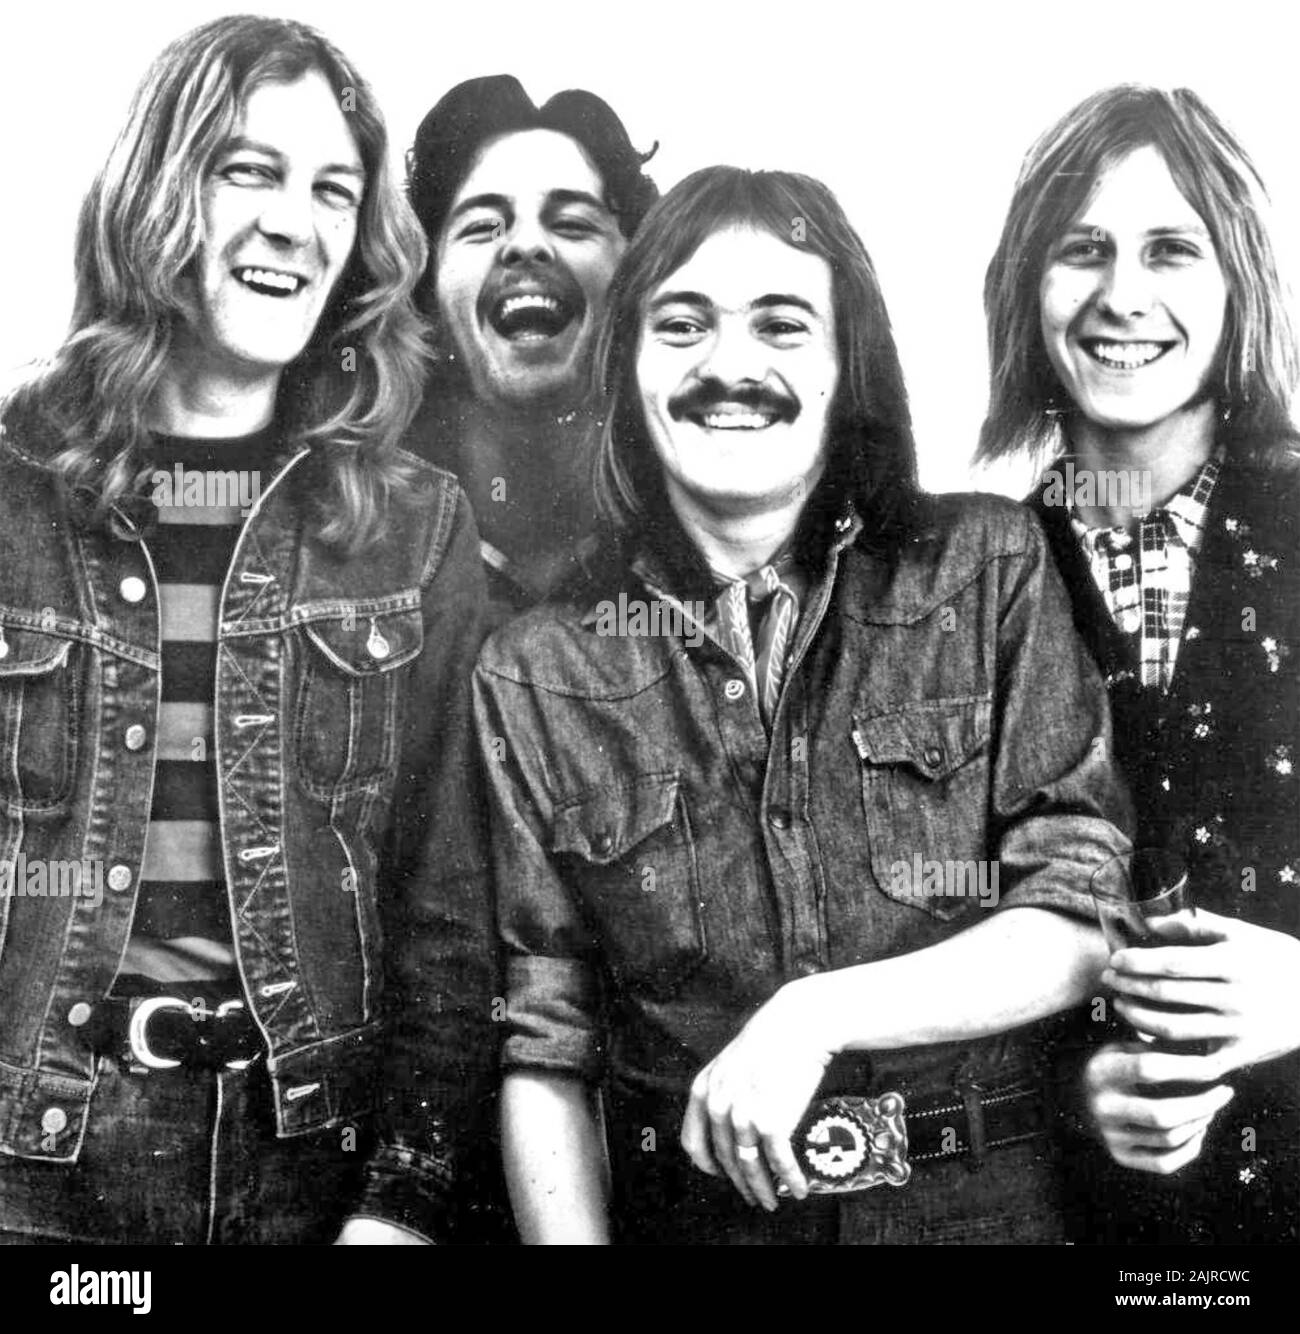 Torta di umile foto promozionale di inglese del gruppo rock nel 1974. Da sinistra: Clem Clempson, Greg Ridley, Steve Marriott, Jerry Shirley Foto Stock